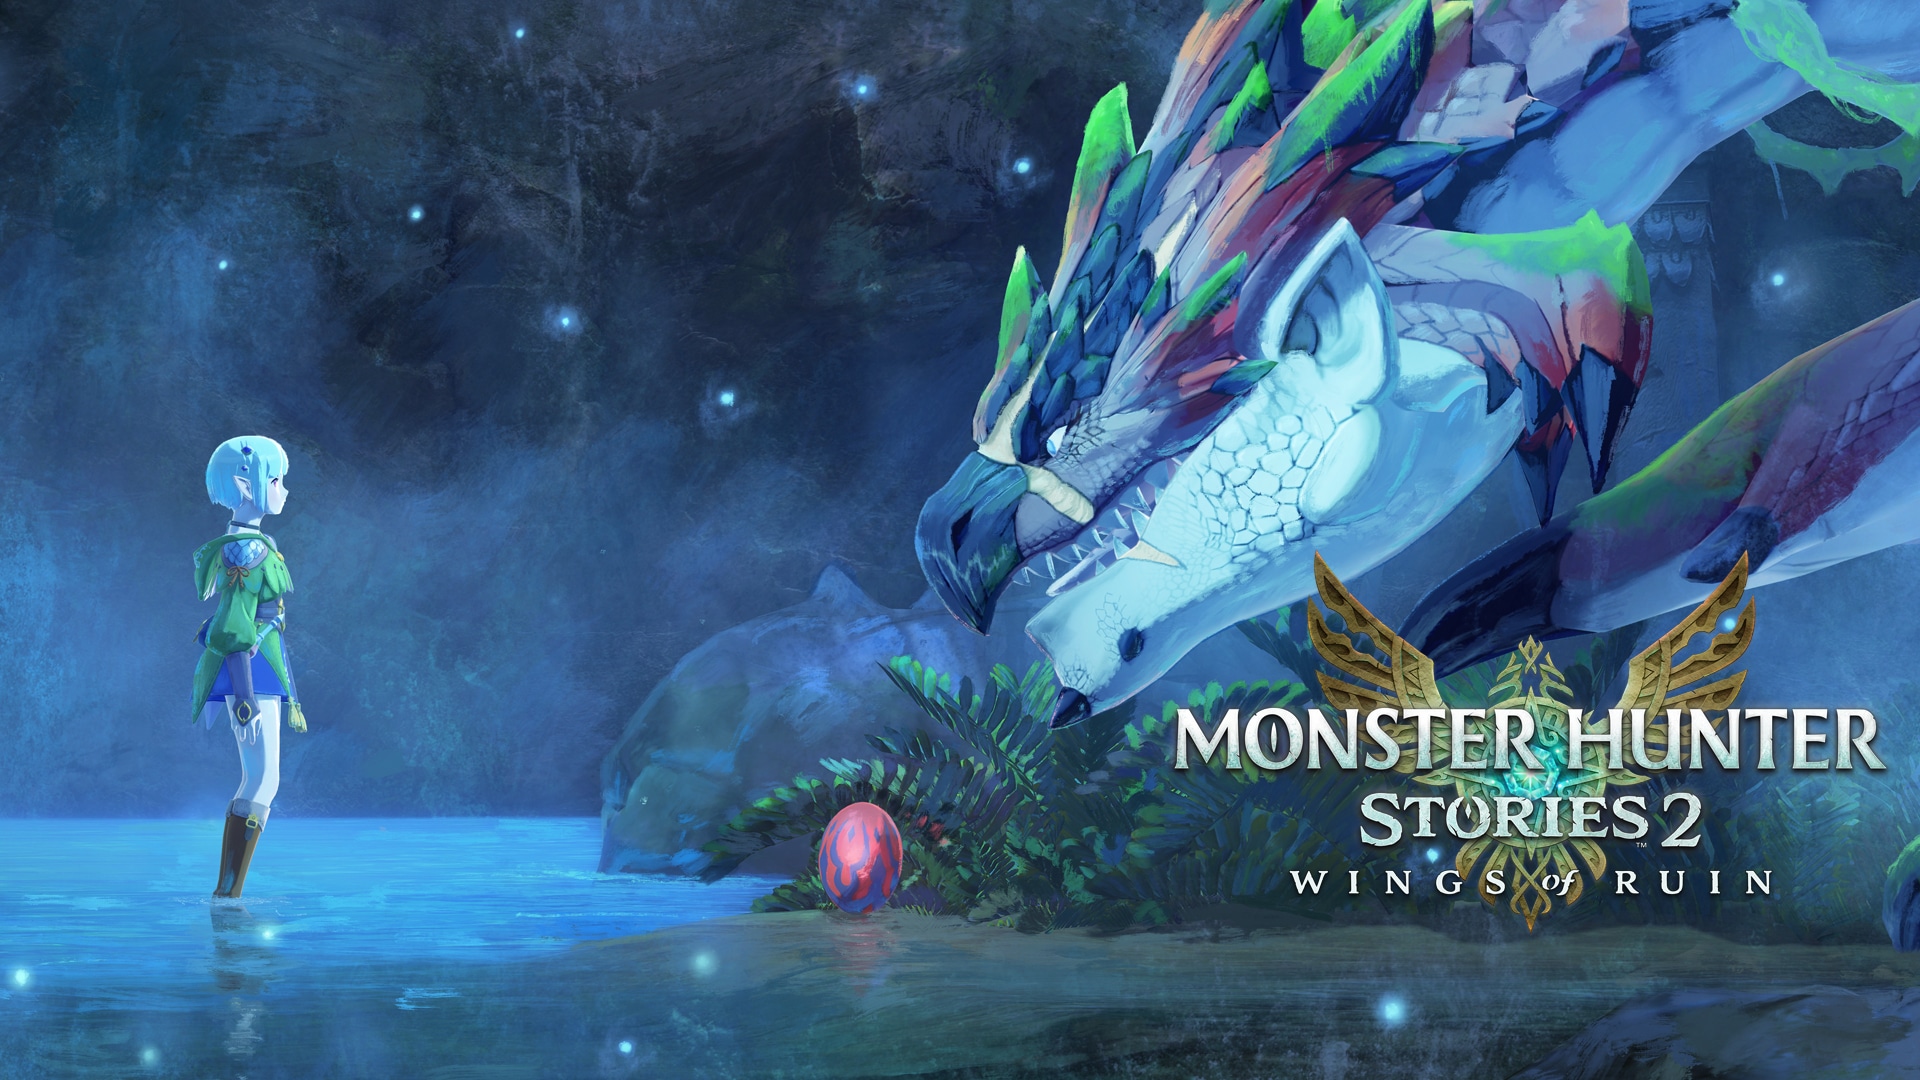 Monster hunter stories 2 : wings of ruin